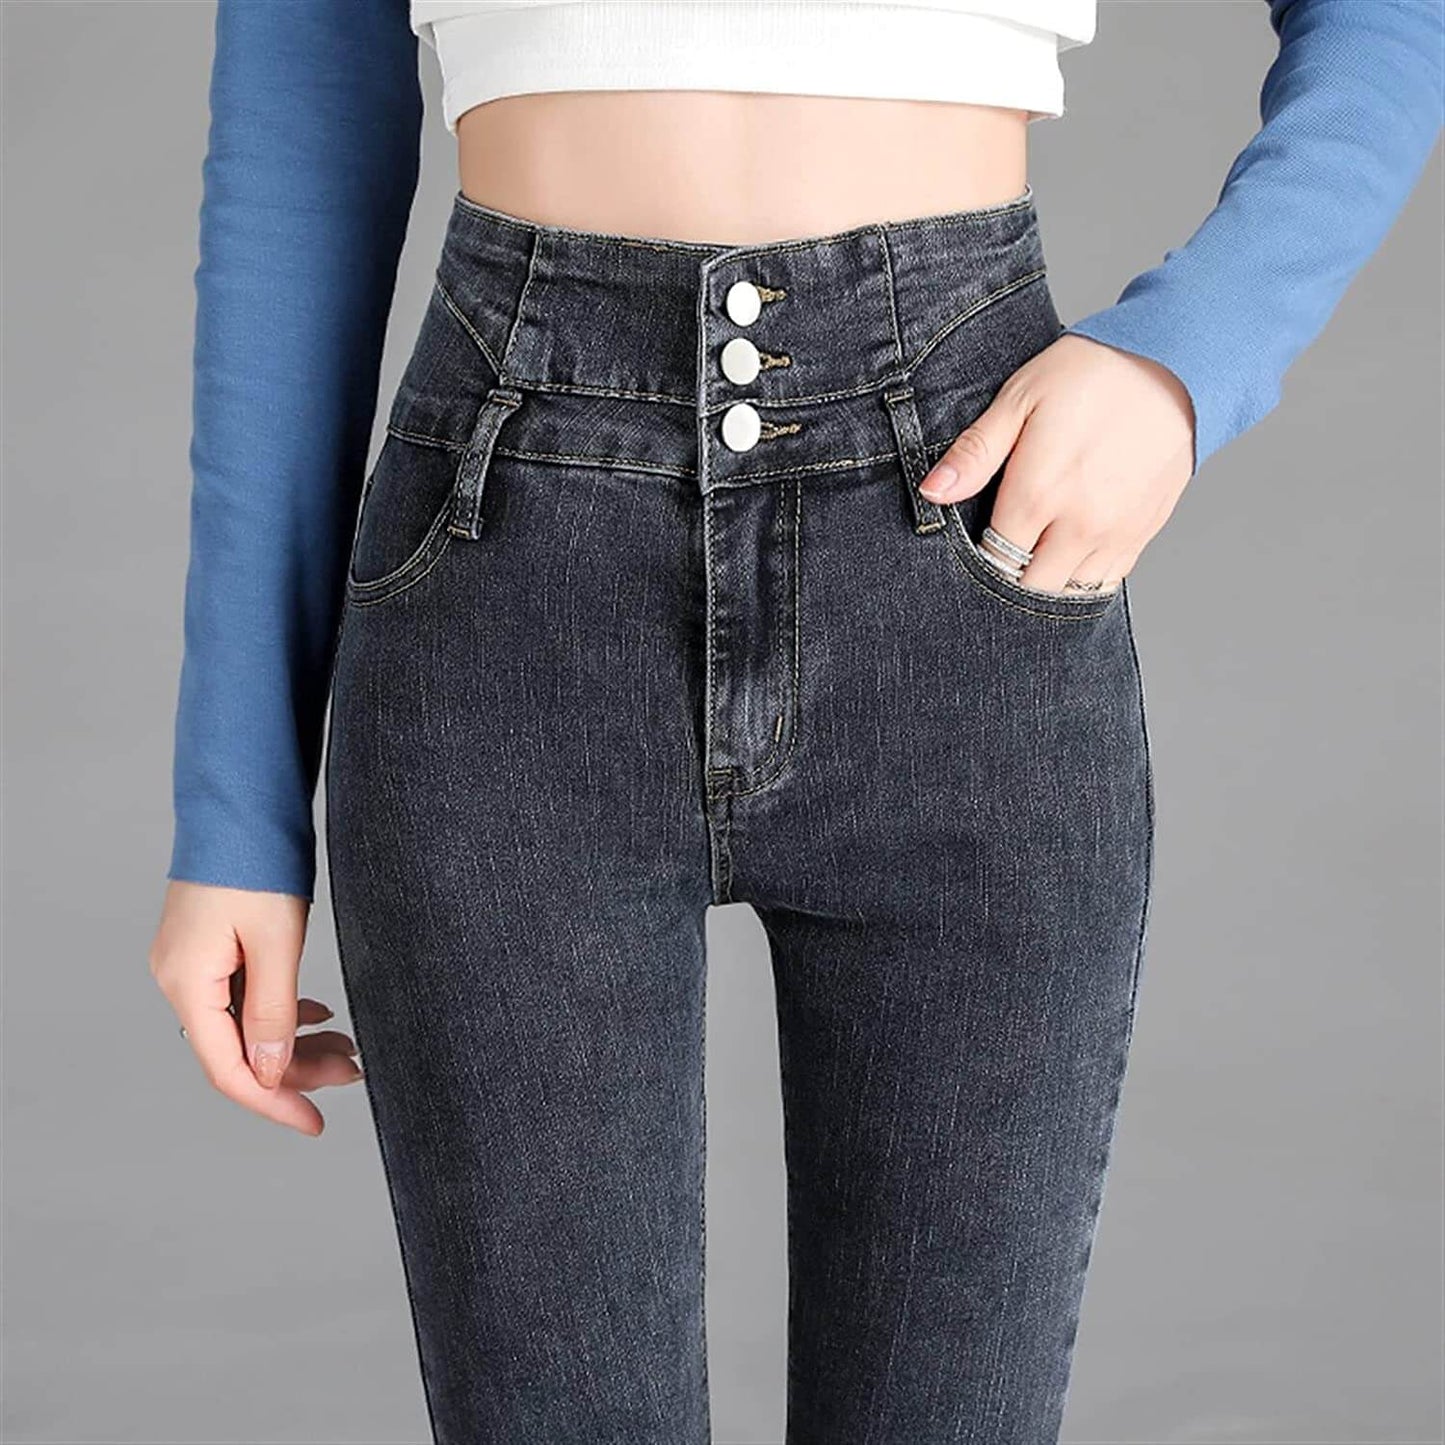 Womens Grey Jeggings Denim Jeans Look Skinny Stretch Sexy Legging Pencil  Pants S 